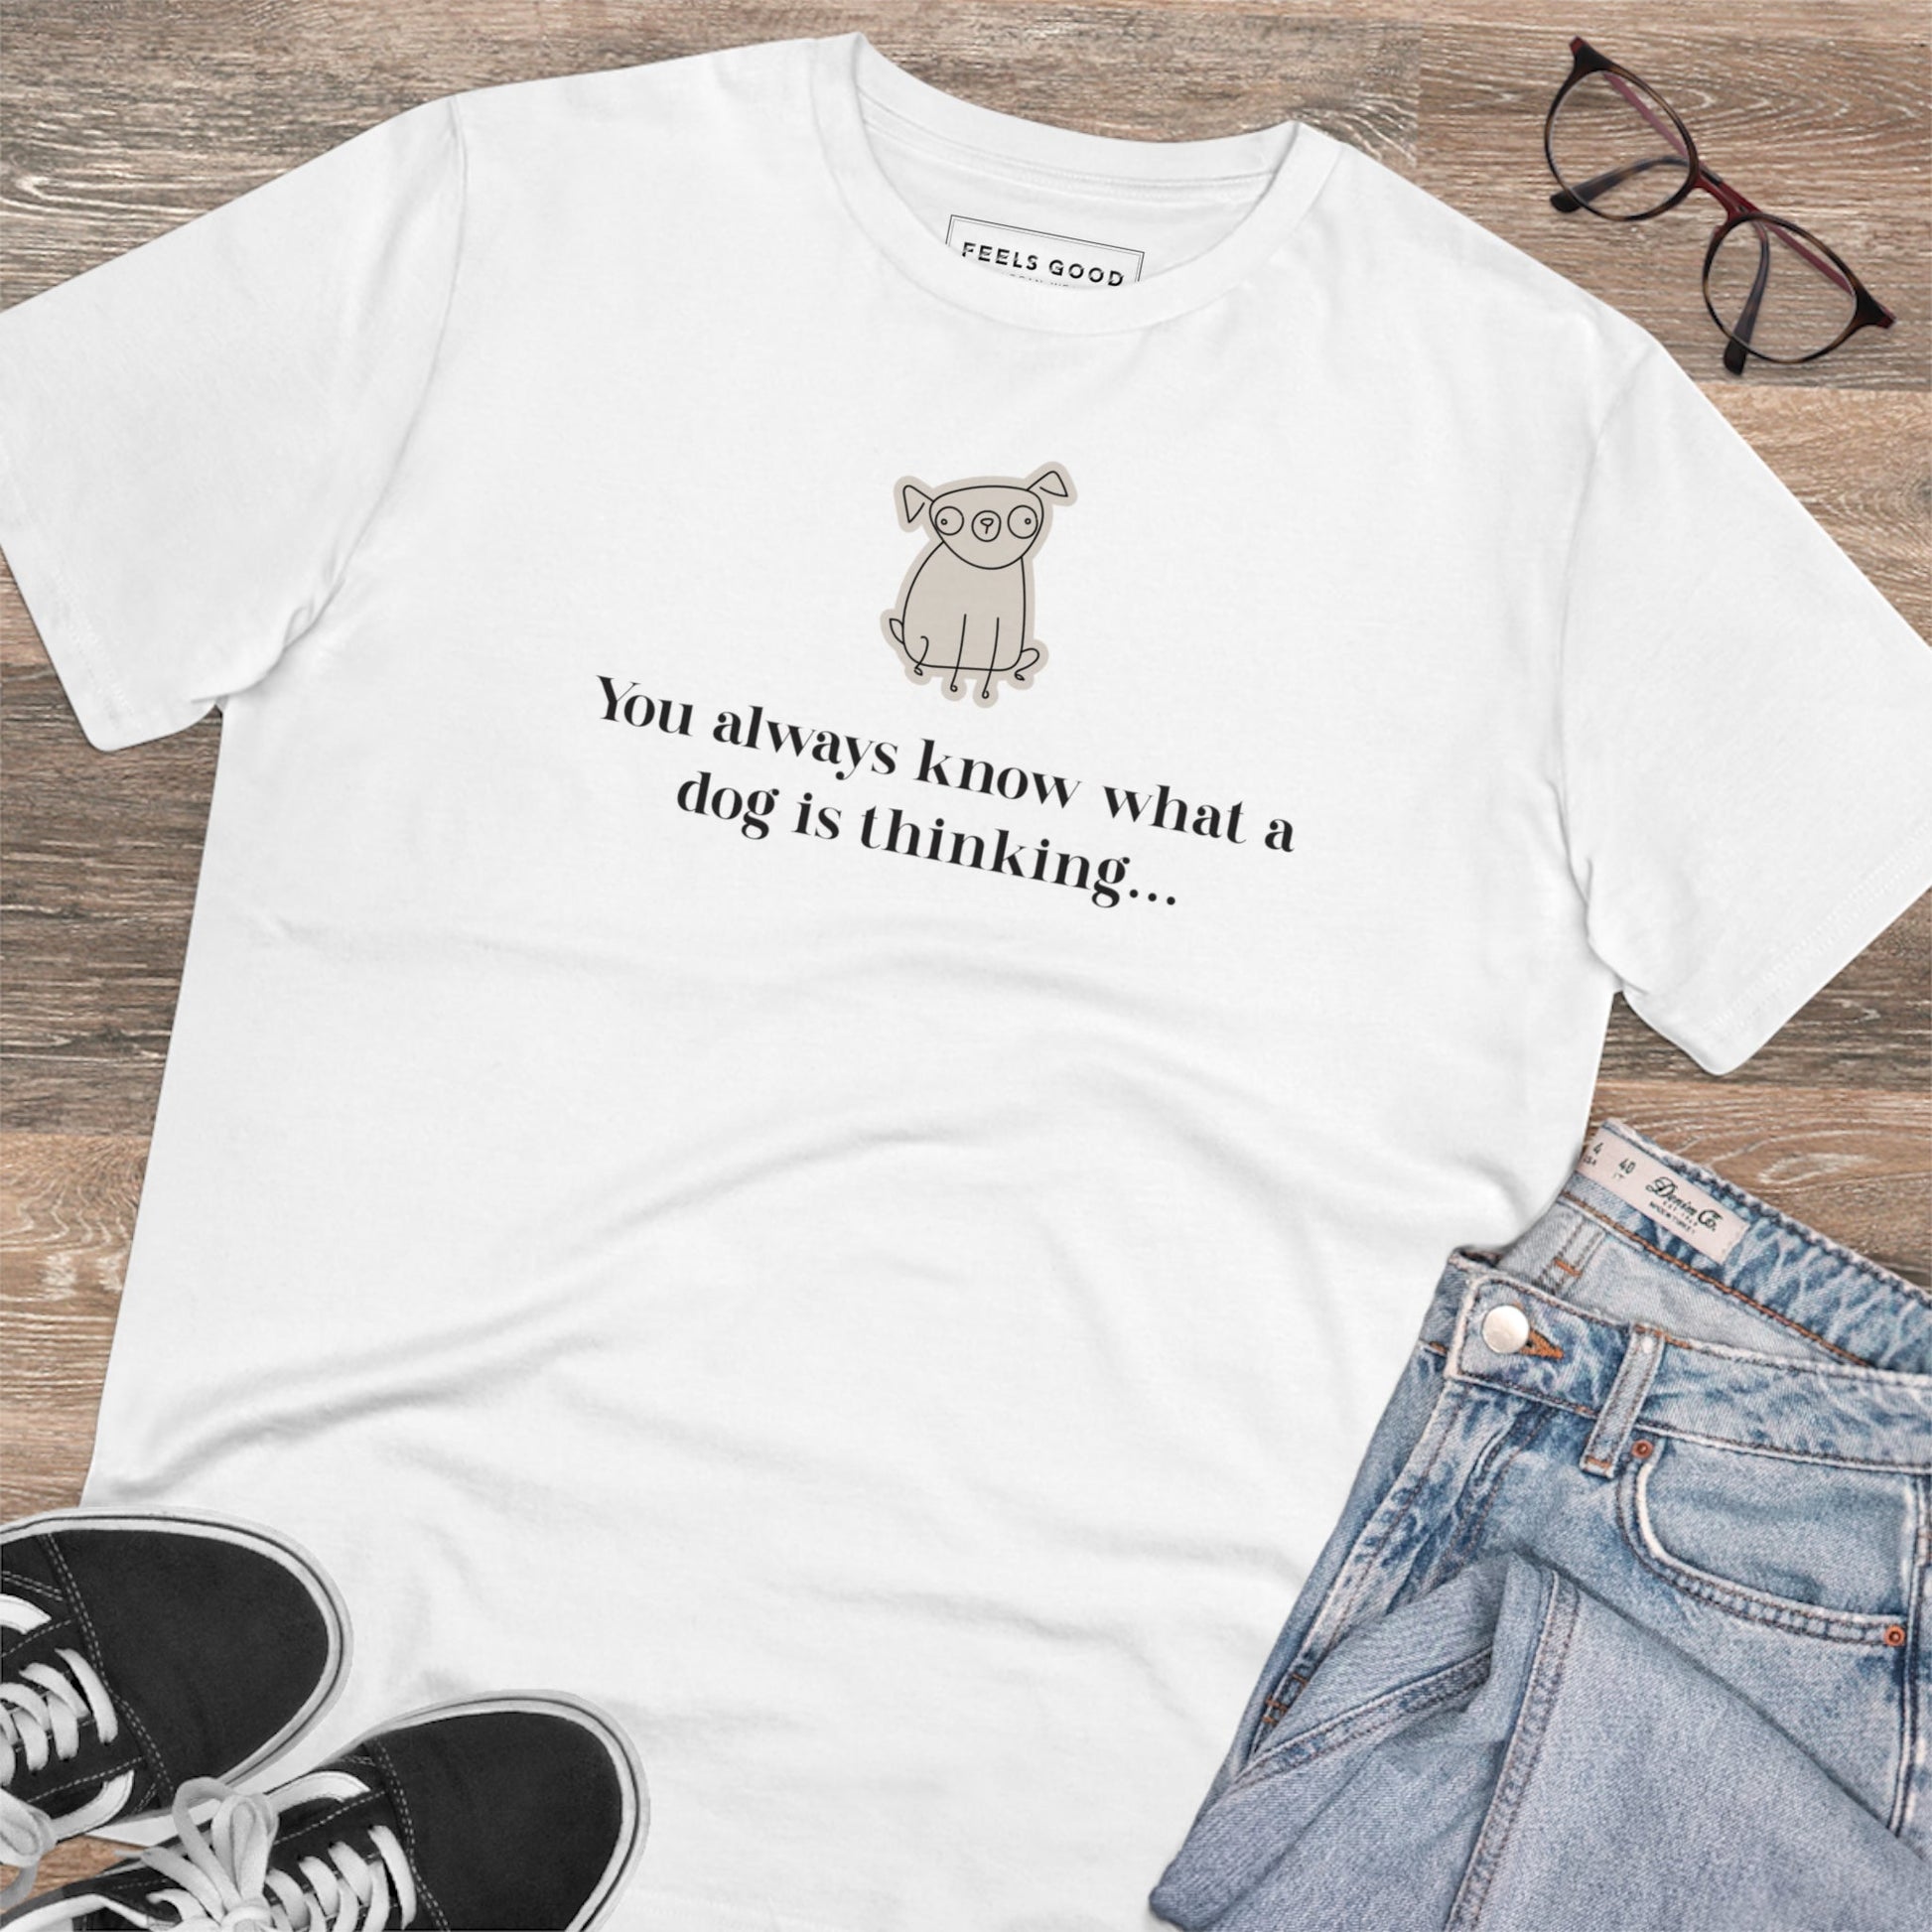 Organic Cotton 'The Psychic' Funny Dog T-shirt - Fun Dog T shirt